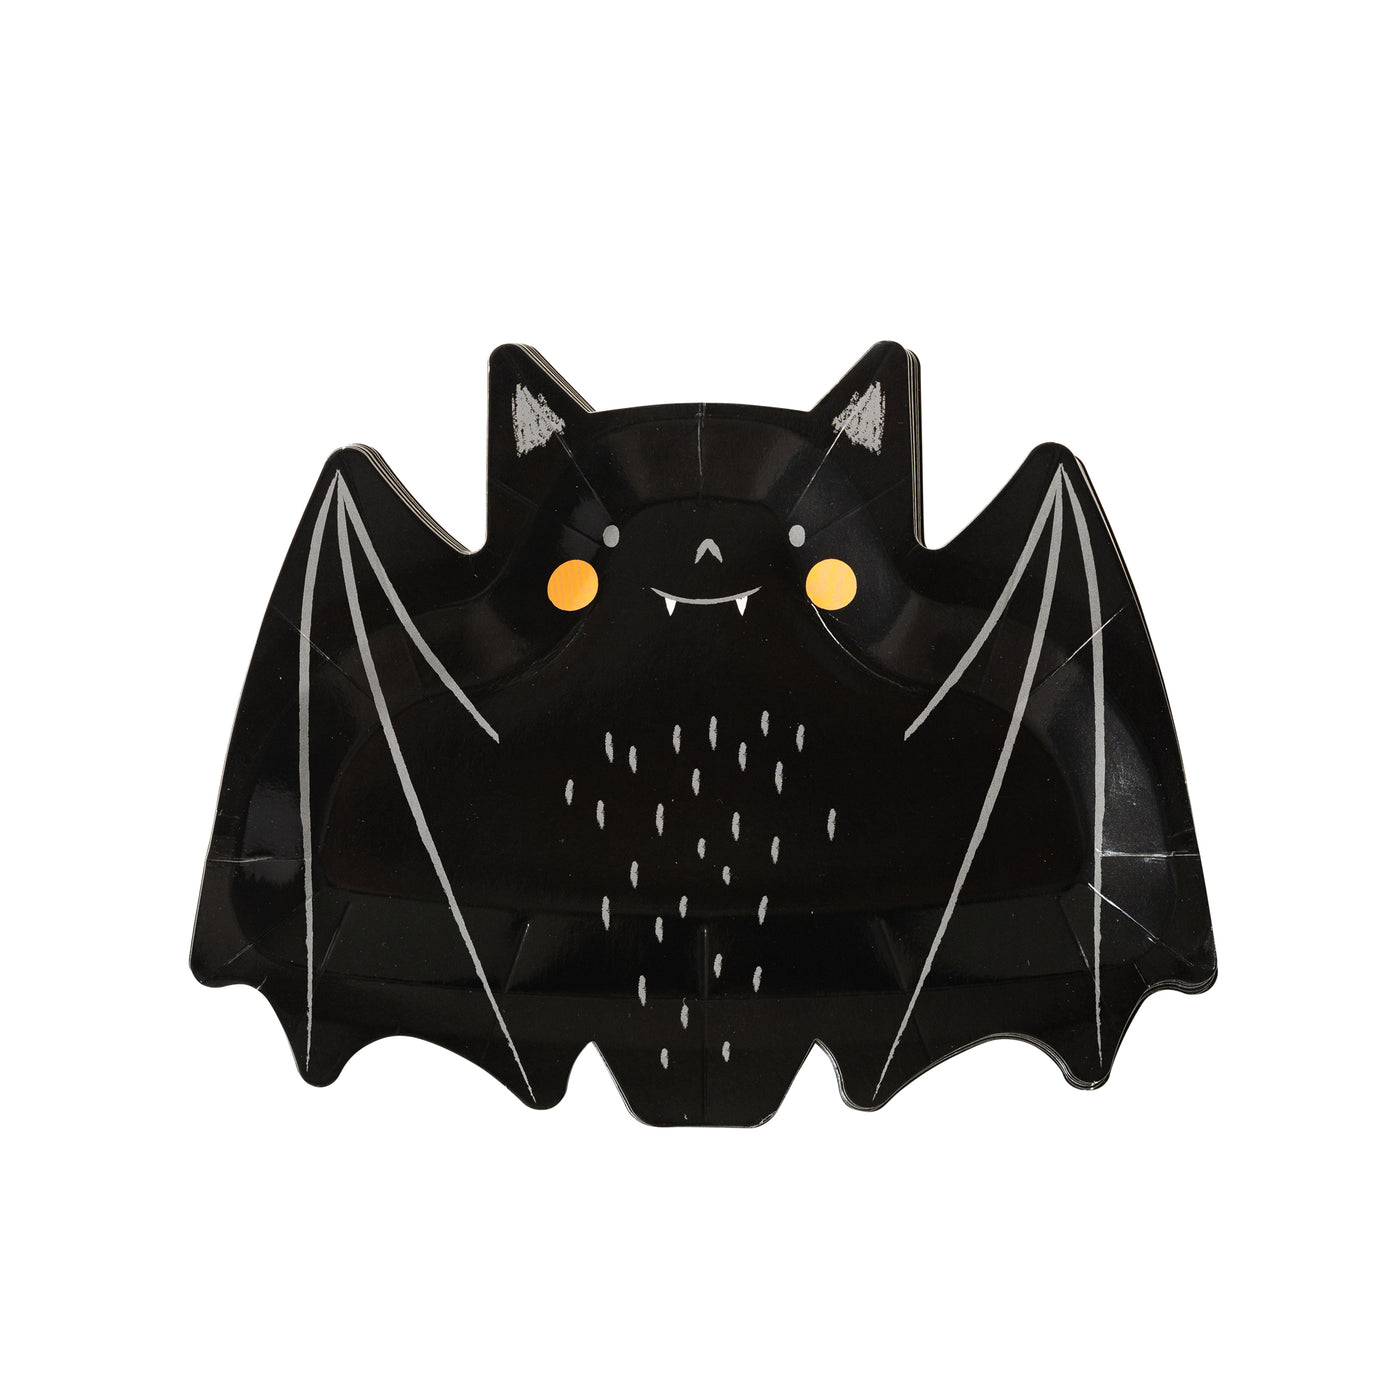 BAT1040 -  Freakin' Bats Bat Shaped Paper Plate